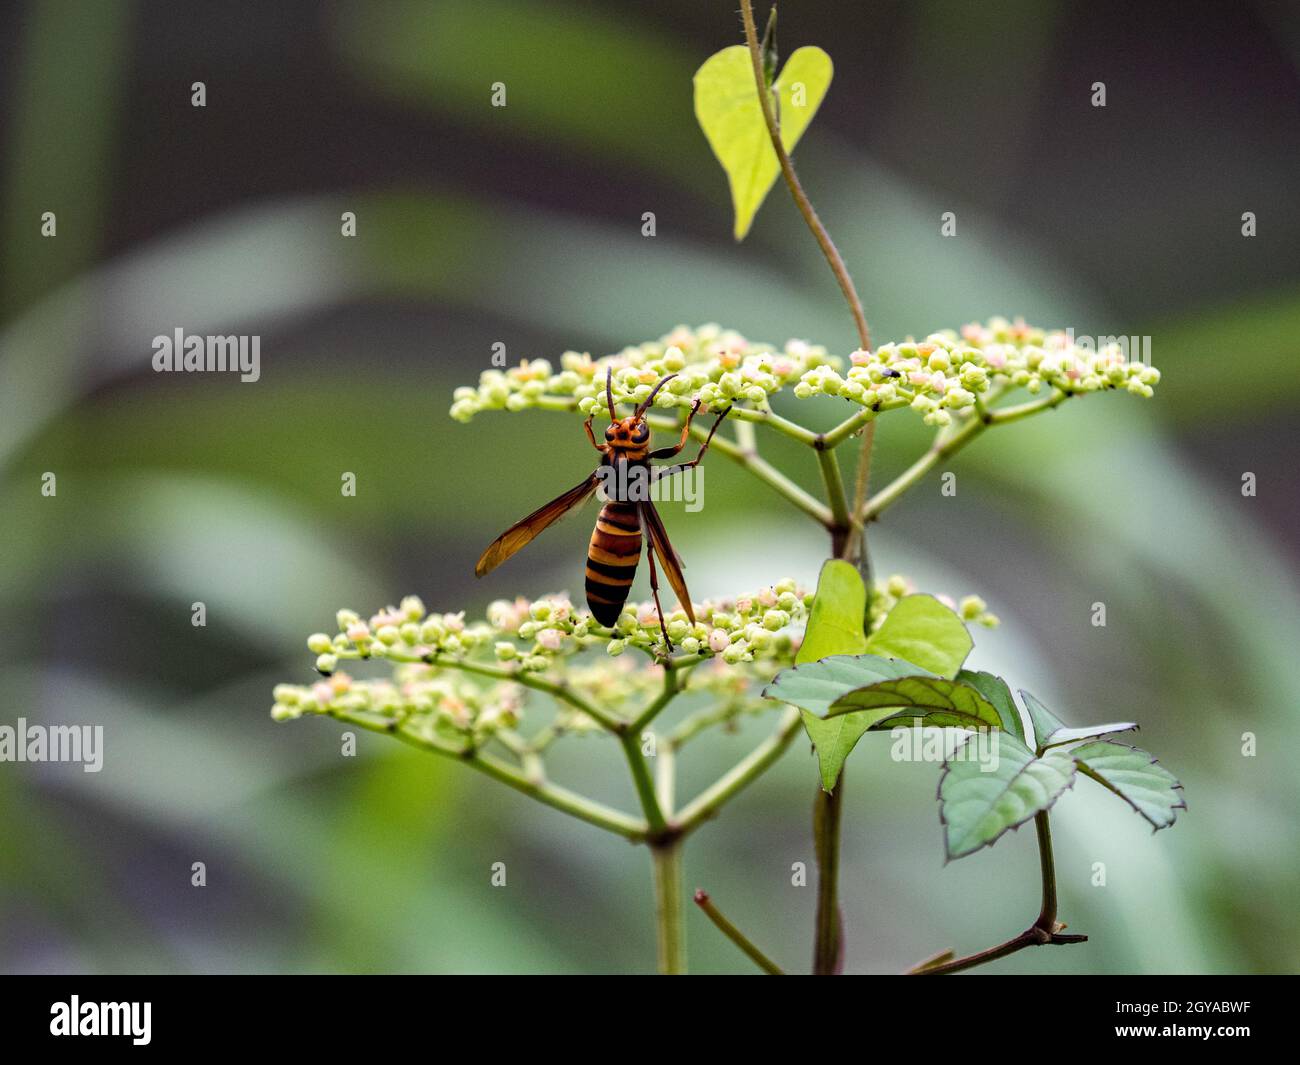 Closeup shot of a Japanese giant hornet hanging from a small bushkiller vine flower Stock Photo